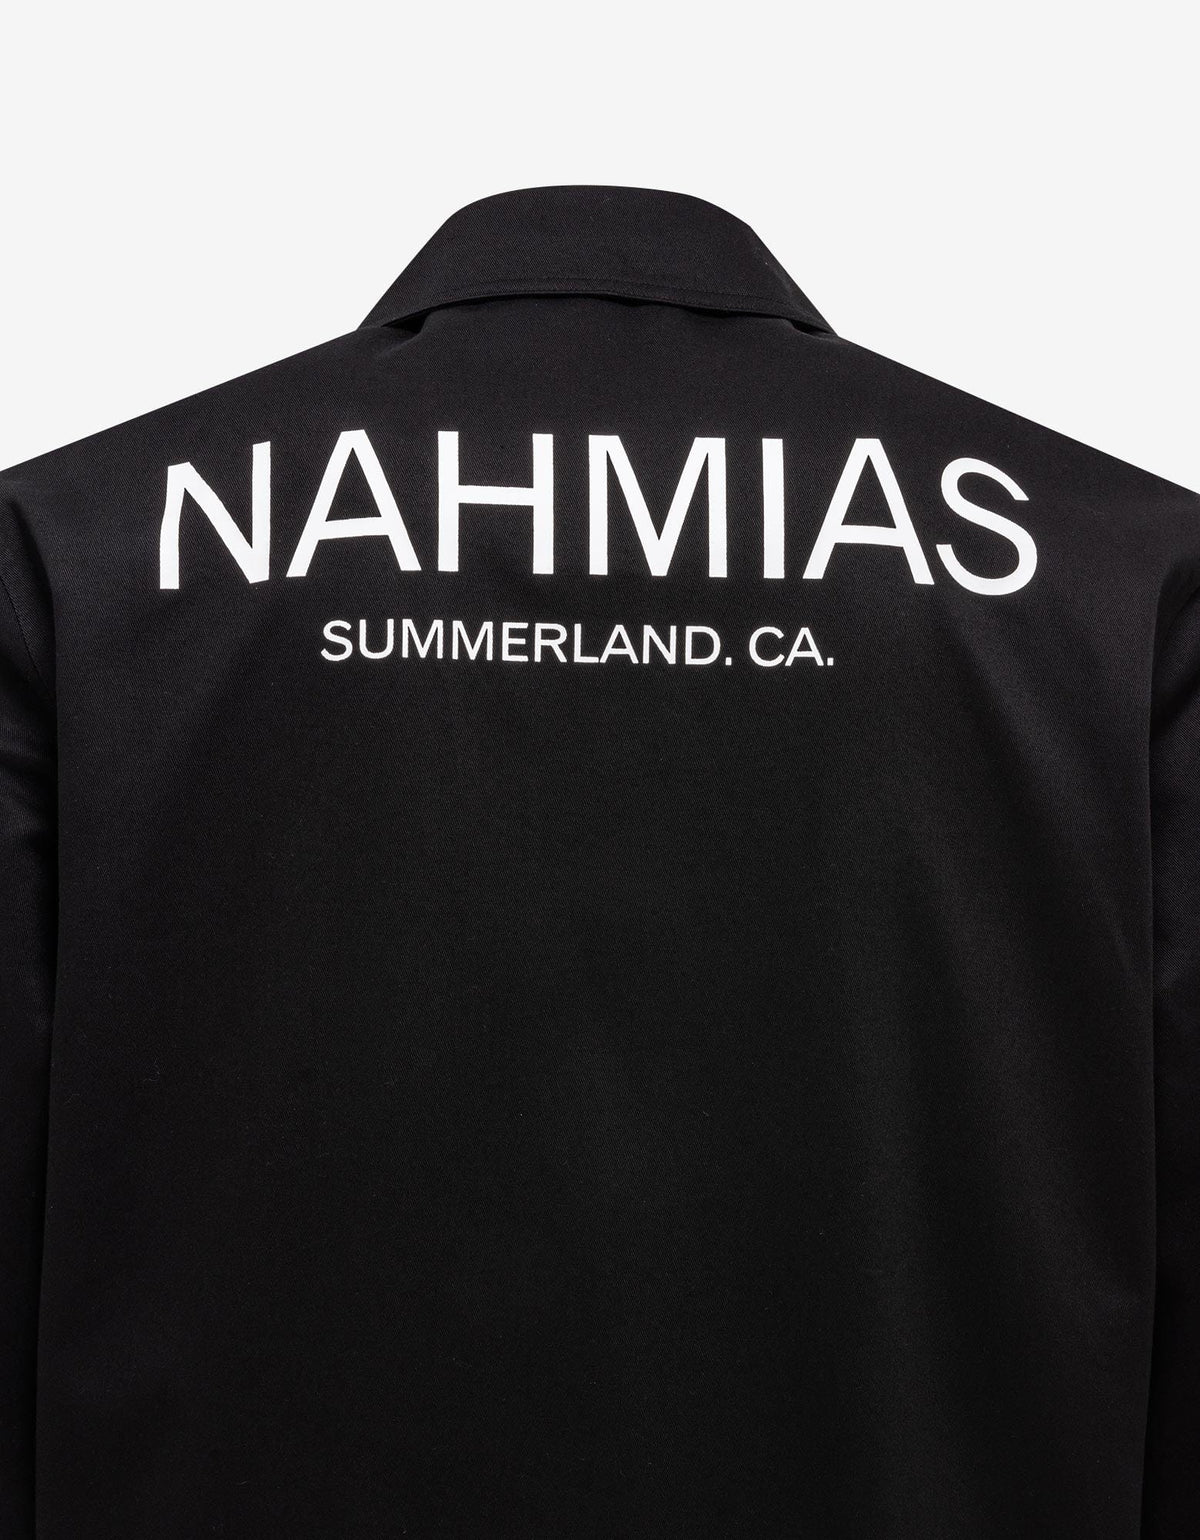 Nahmias Black Summerland CA Worker Jacket